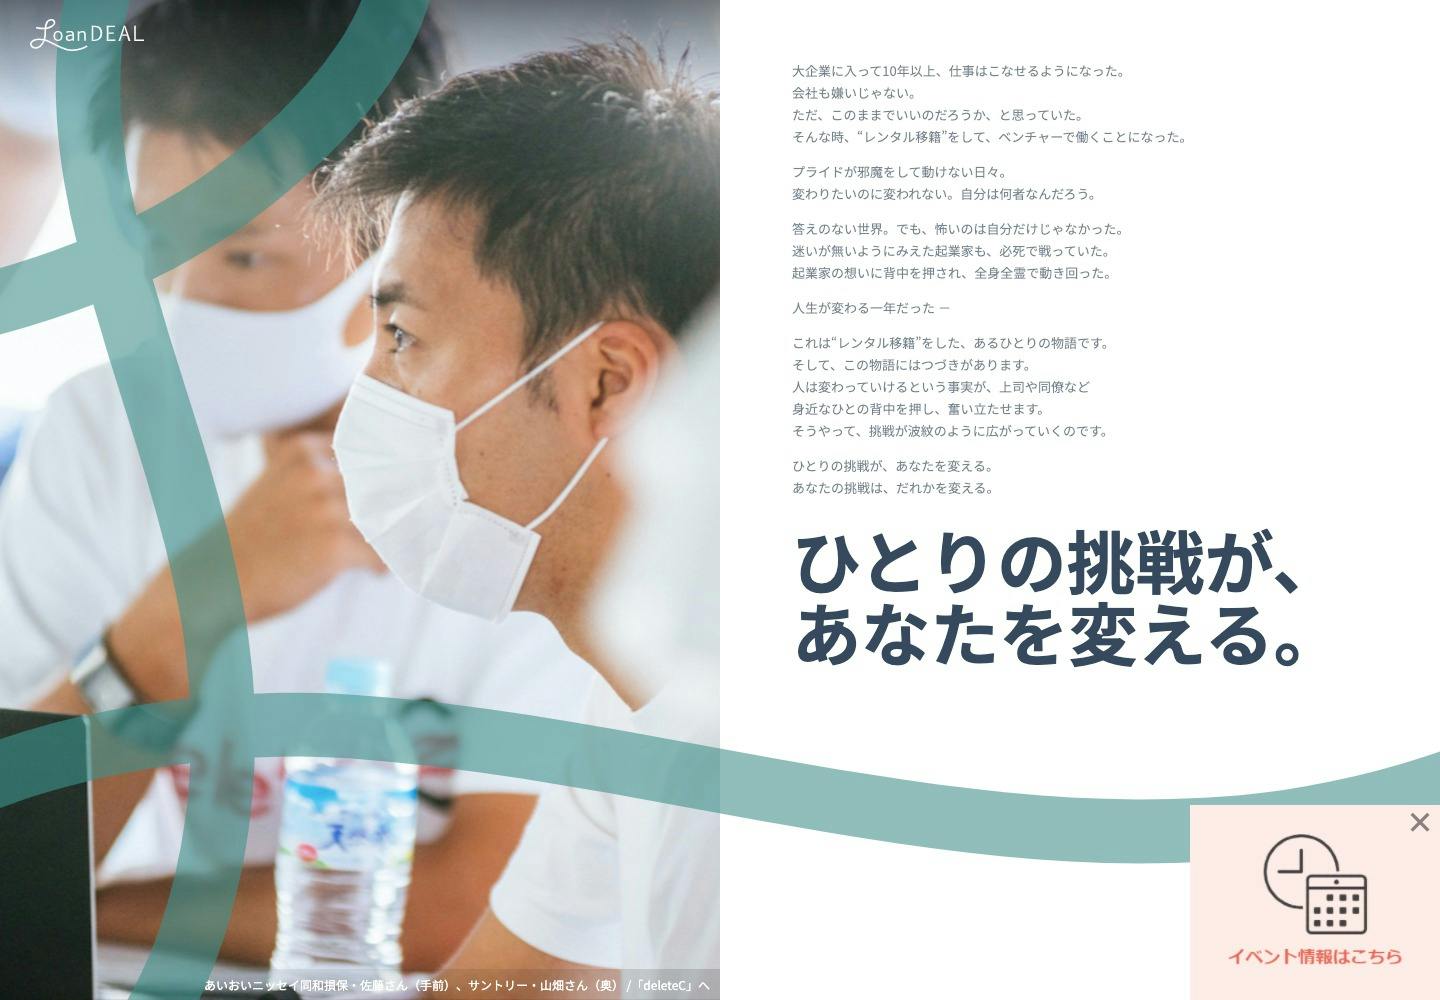 Cover Image for 企業間レンタル移籍プラットフォーム「ローンディール」